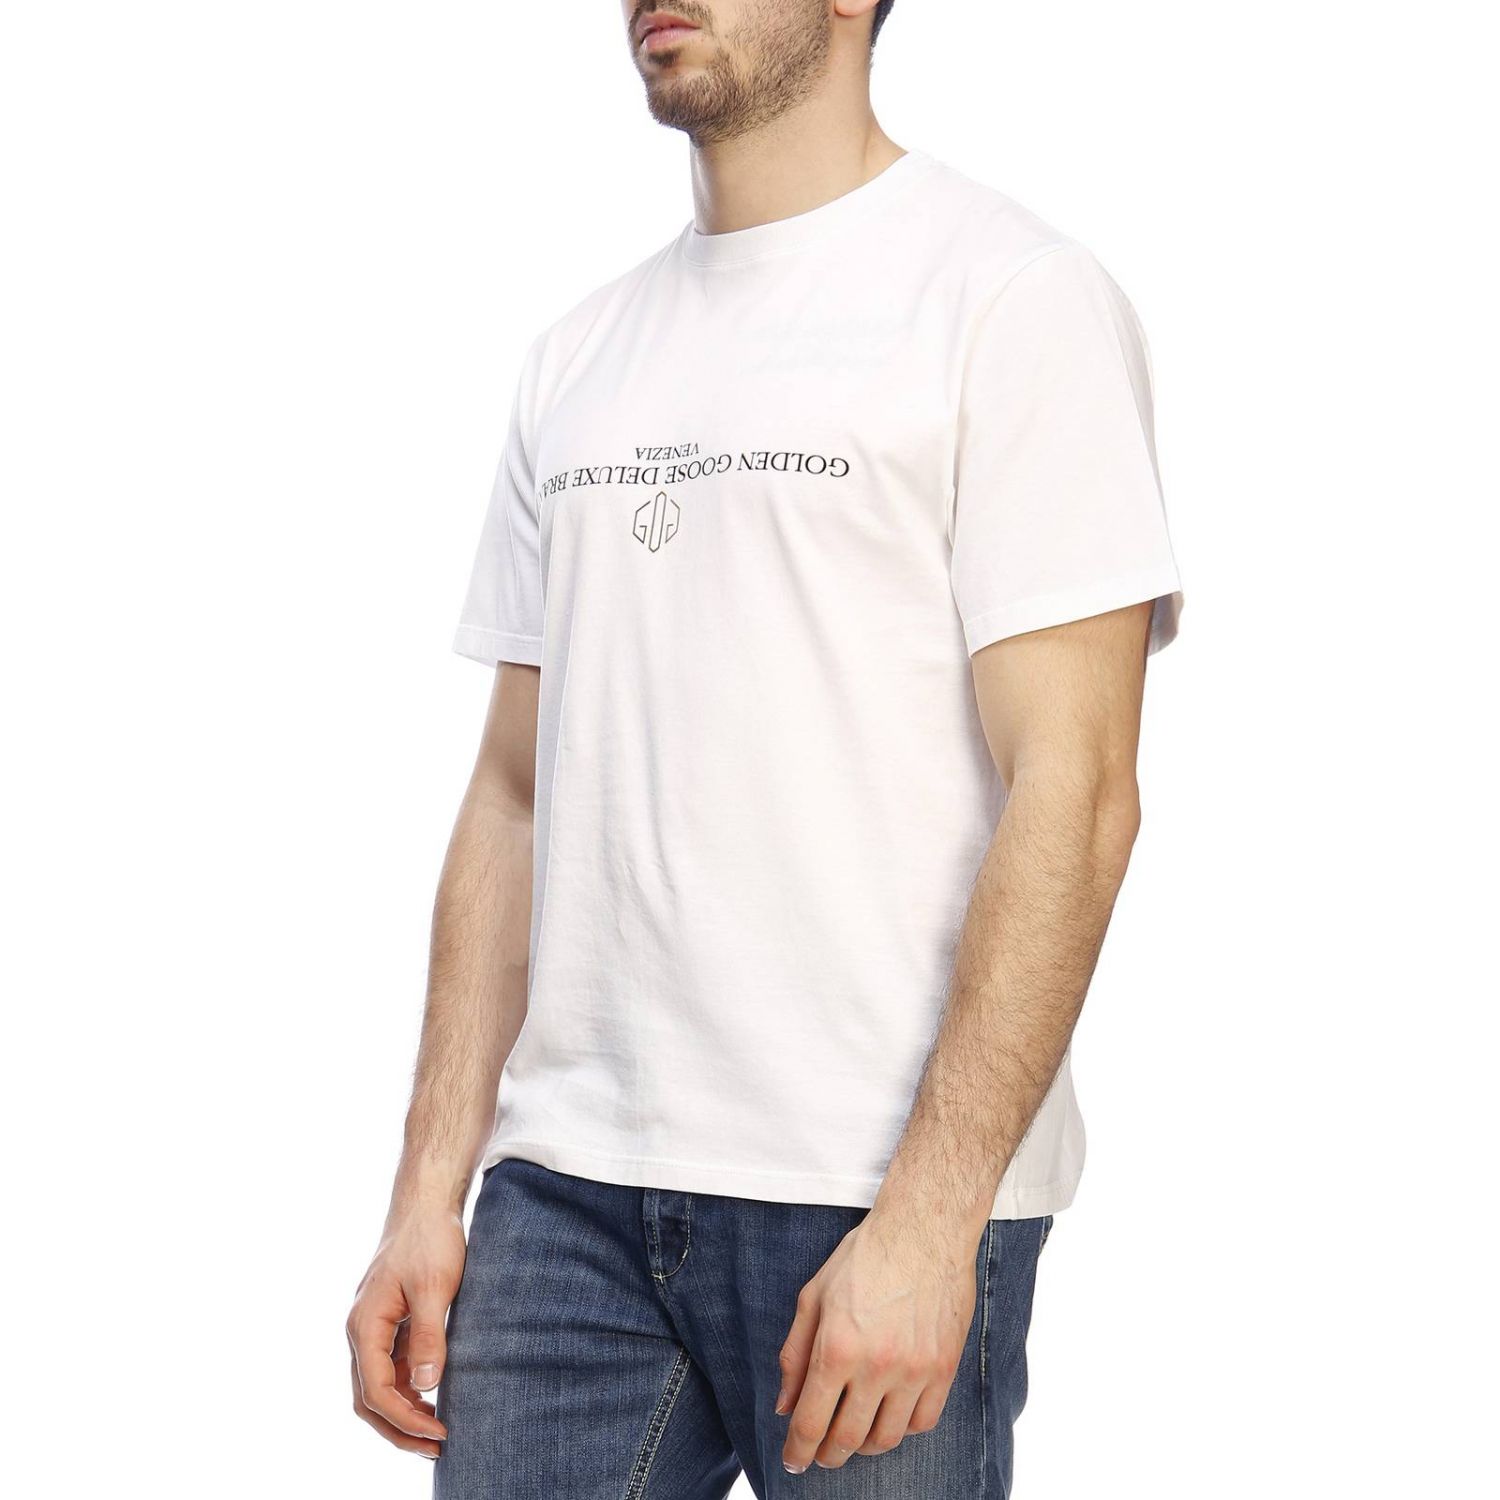 Golden Goose Outlet: T-shirt men | T-Shirt Golden Goose Men White | T ...